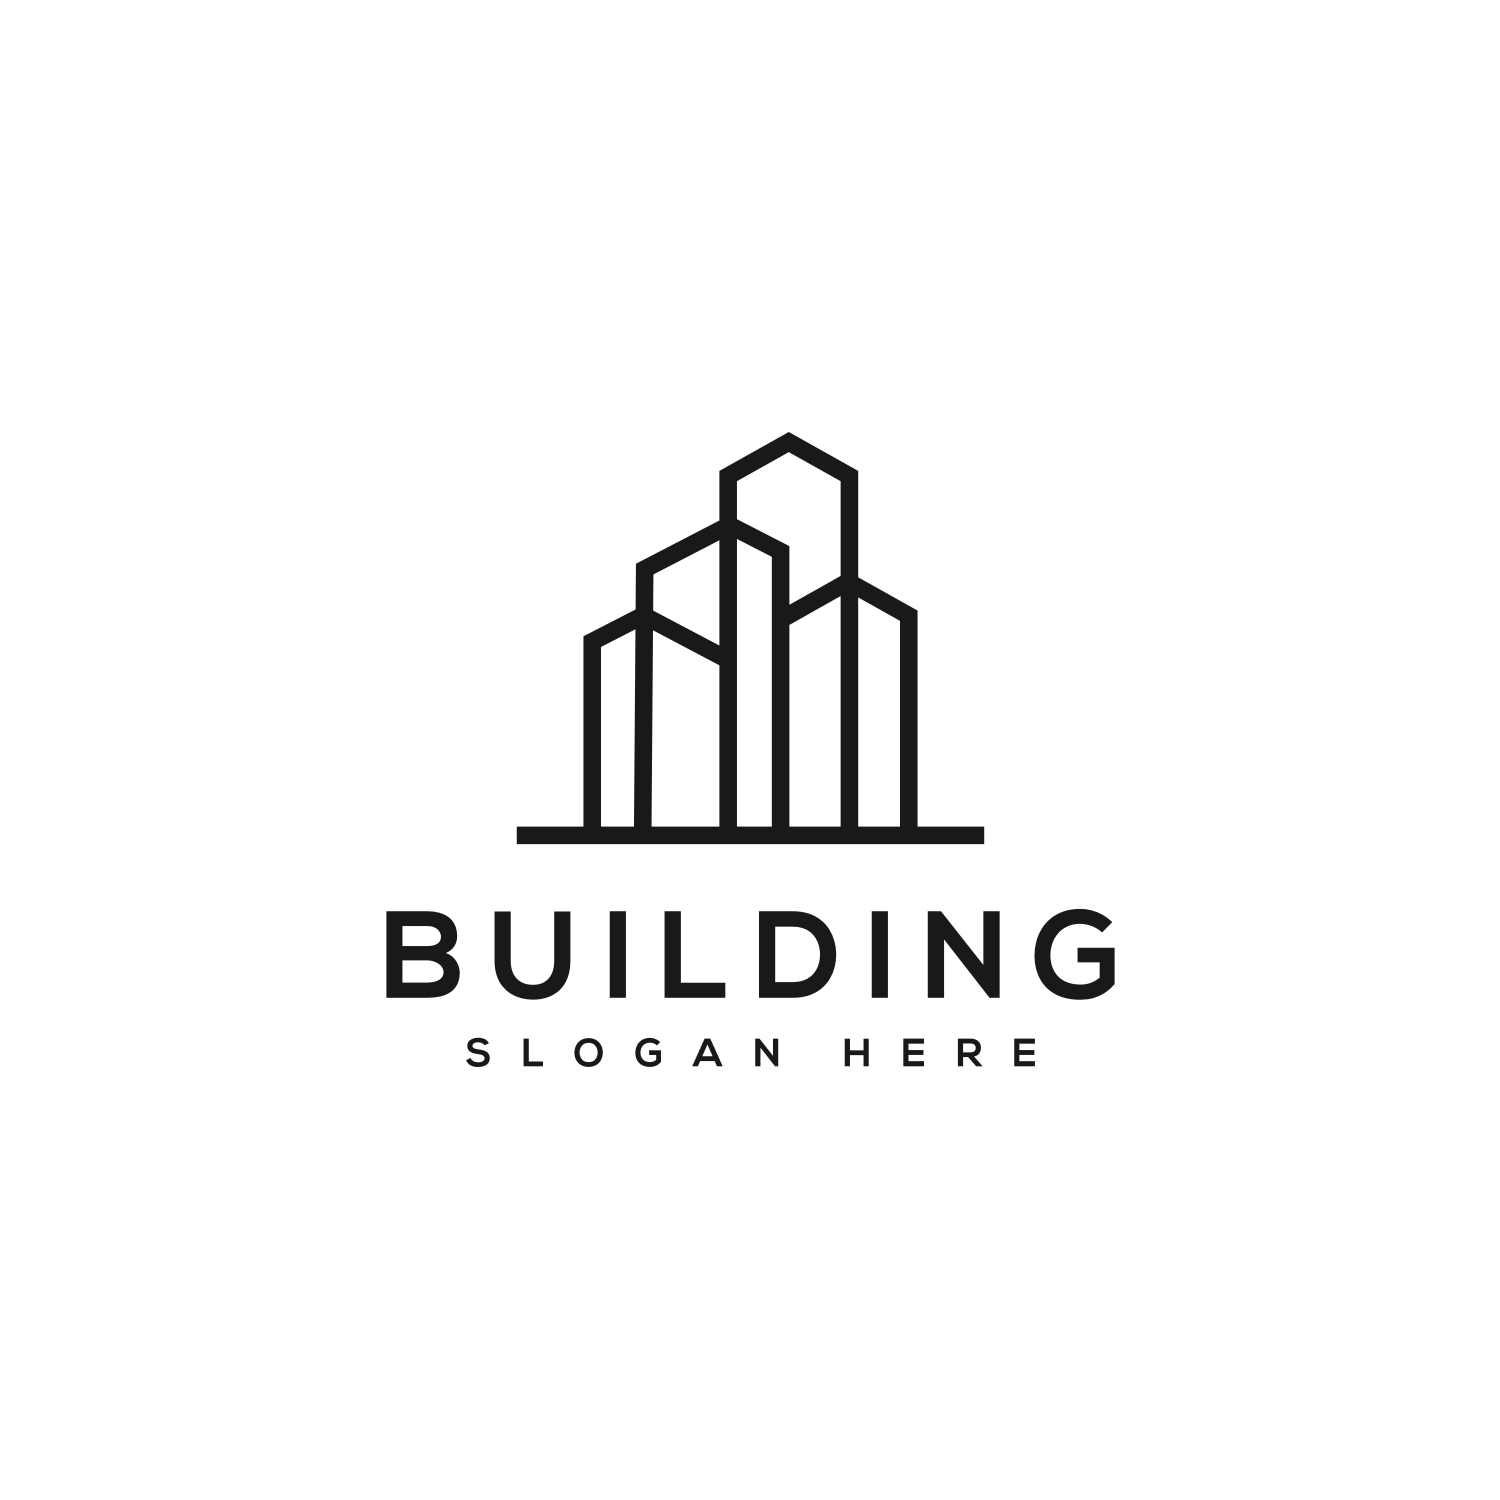 Building Real Estate Logo Vector Design cover image.